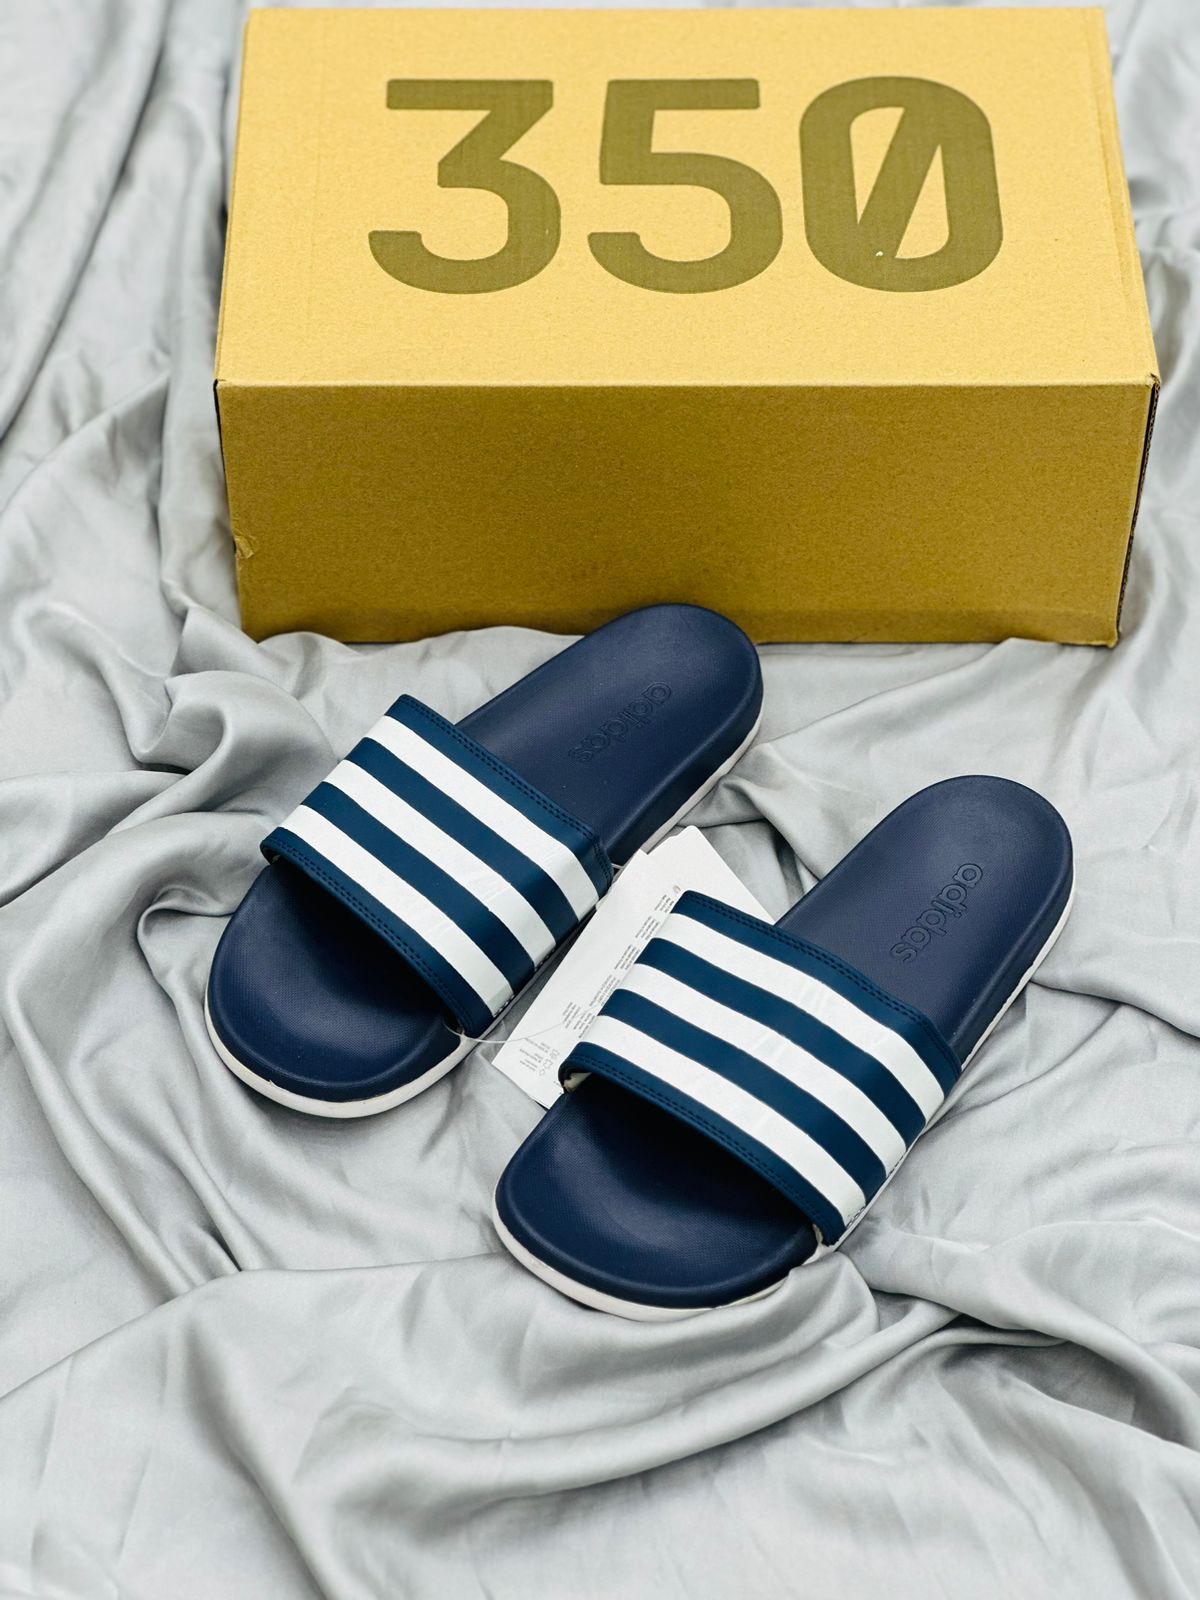 Adidas adilitte Slides Three Stripes - Blue and White